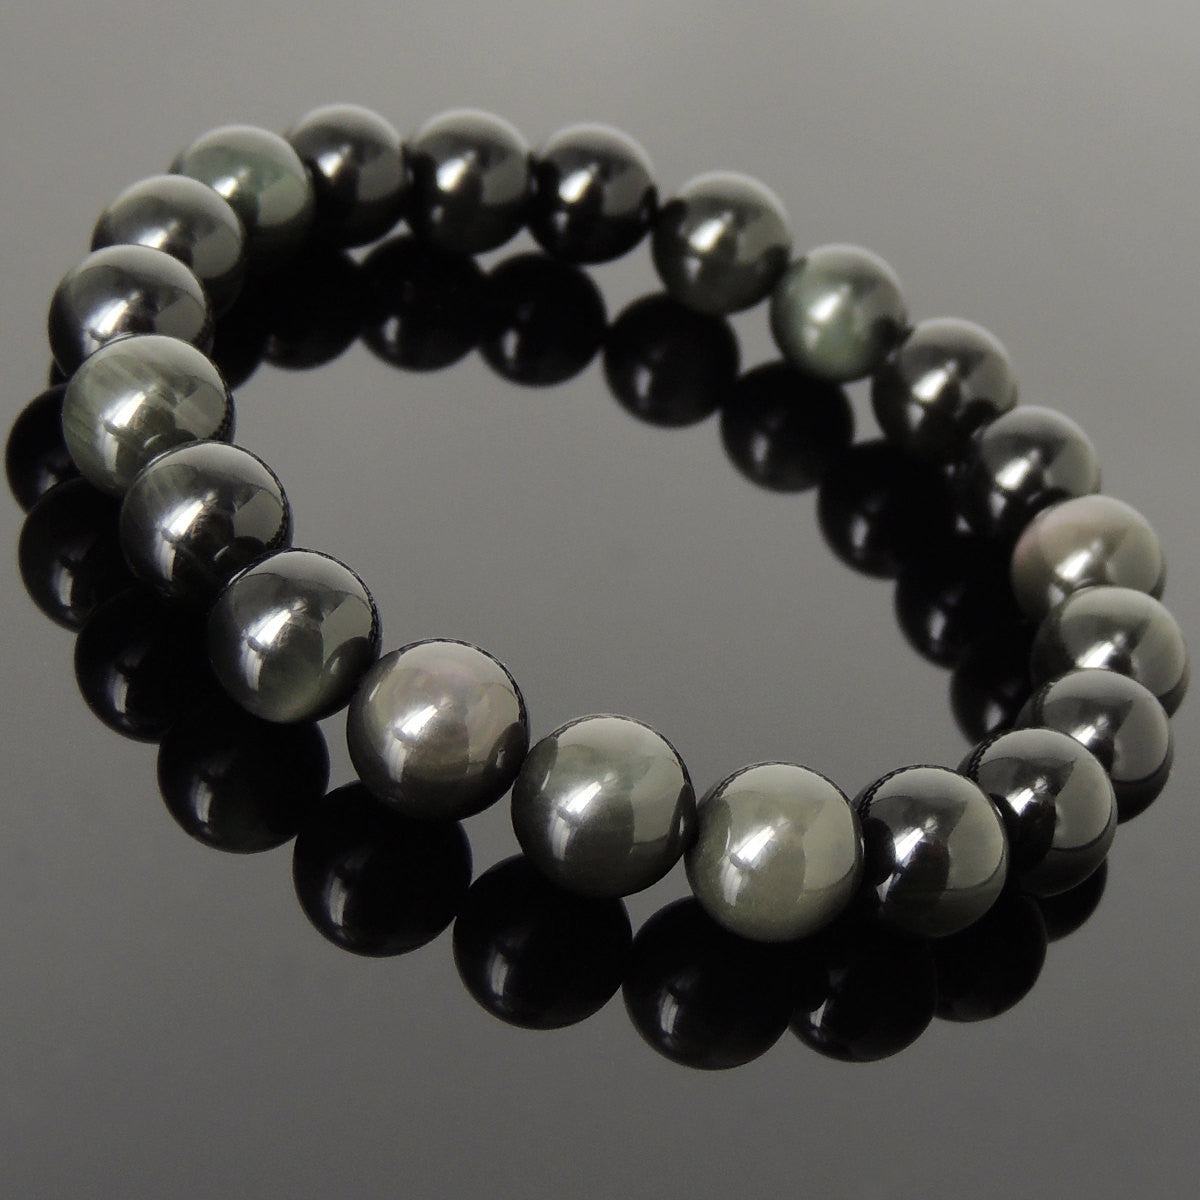 Top-grade Handmade Natural Rainbow Black Obsidian Gemstone Bracelet with 10mm Beads